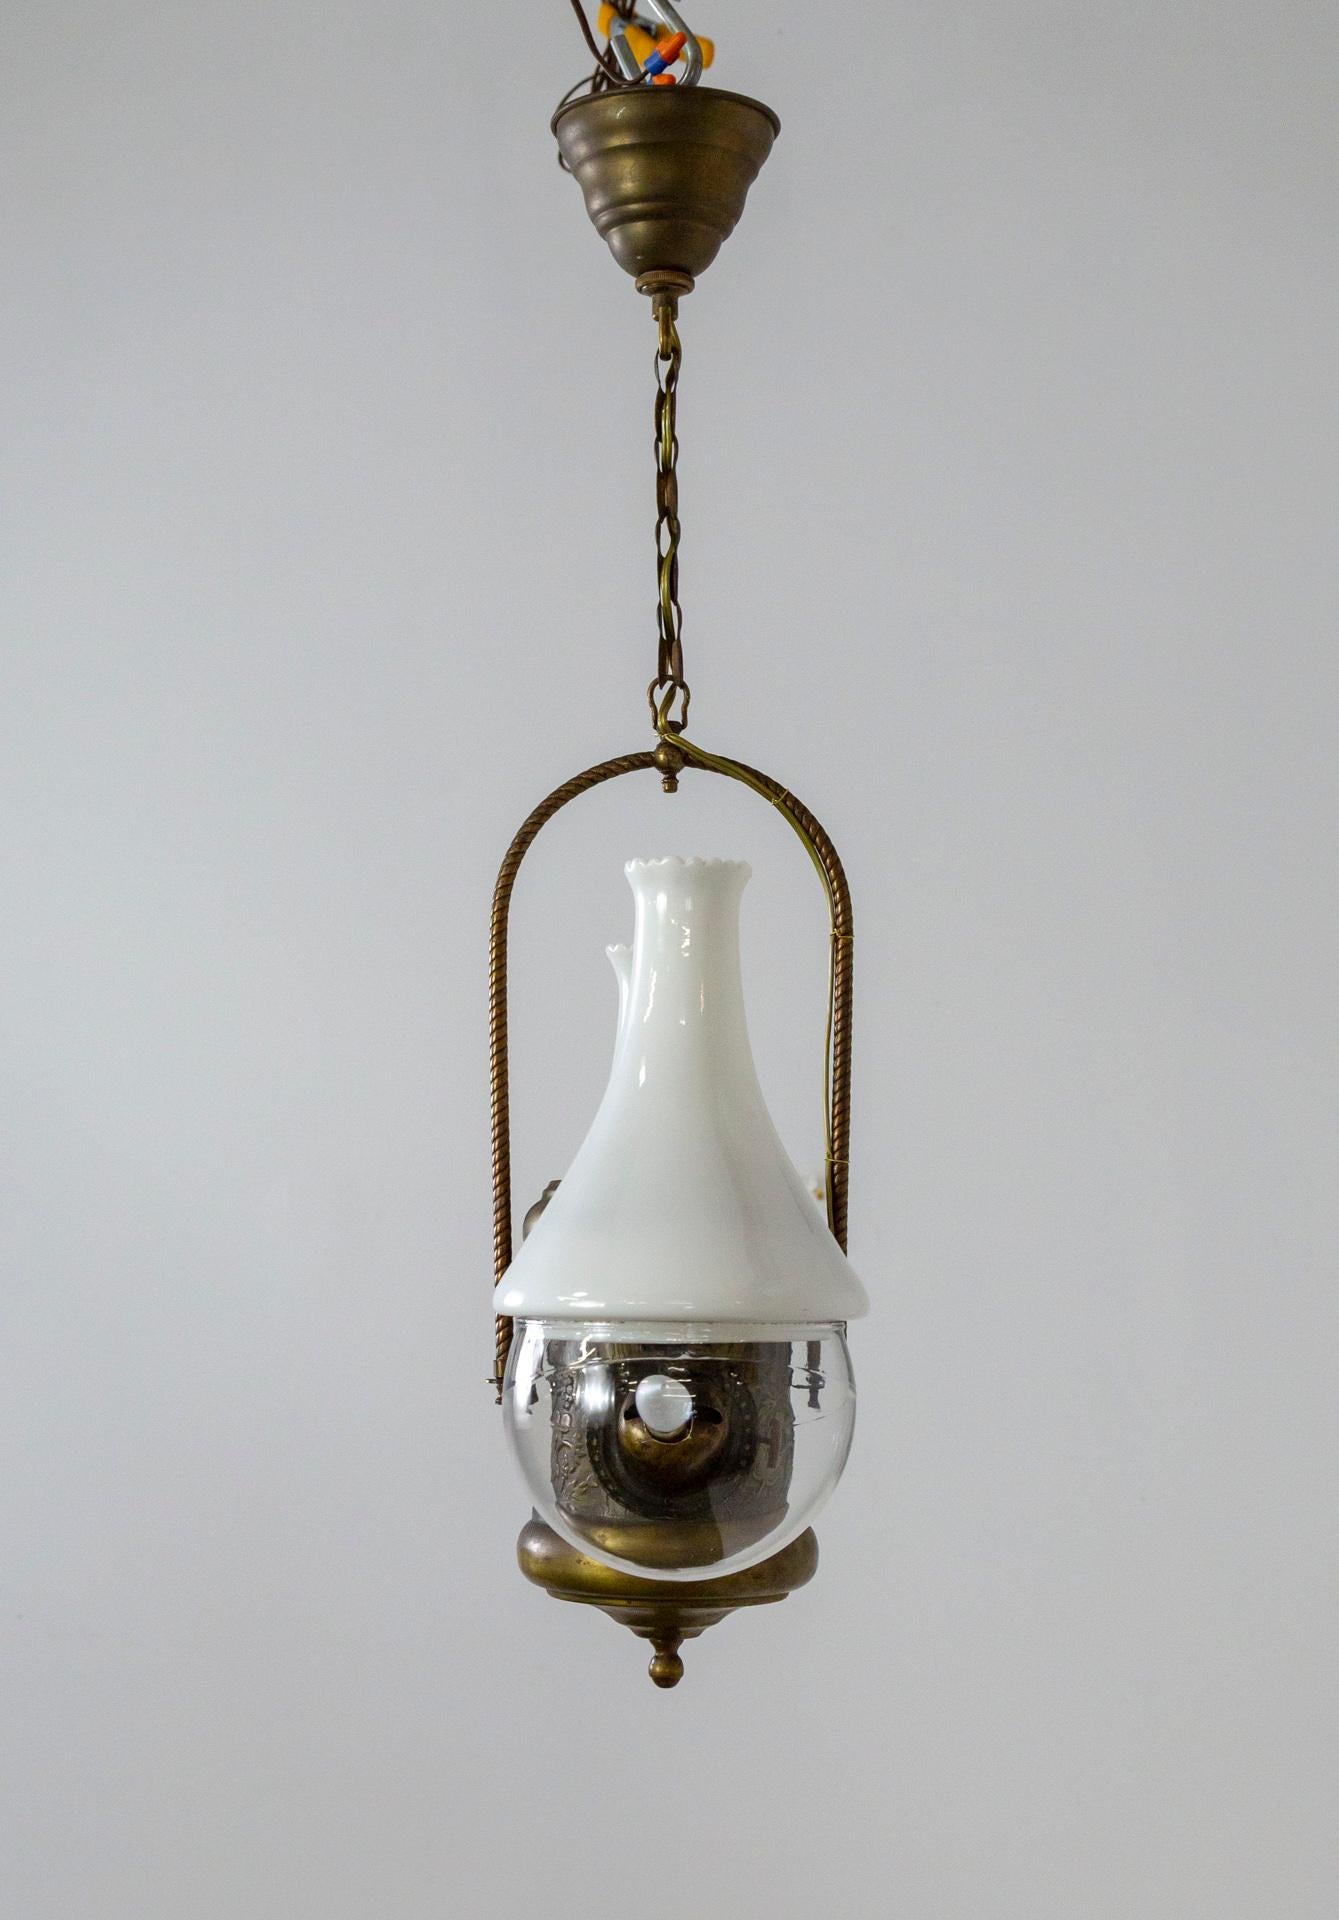 American Angle Lamp Co. Electrified Kerosene Brass & Glass 2-Light Hanging Fixture